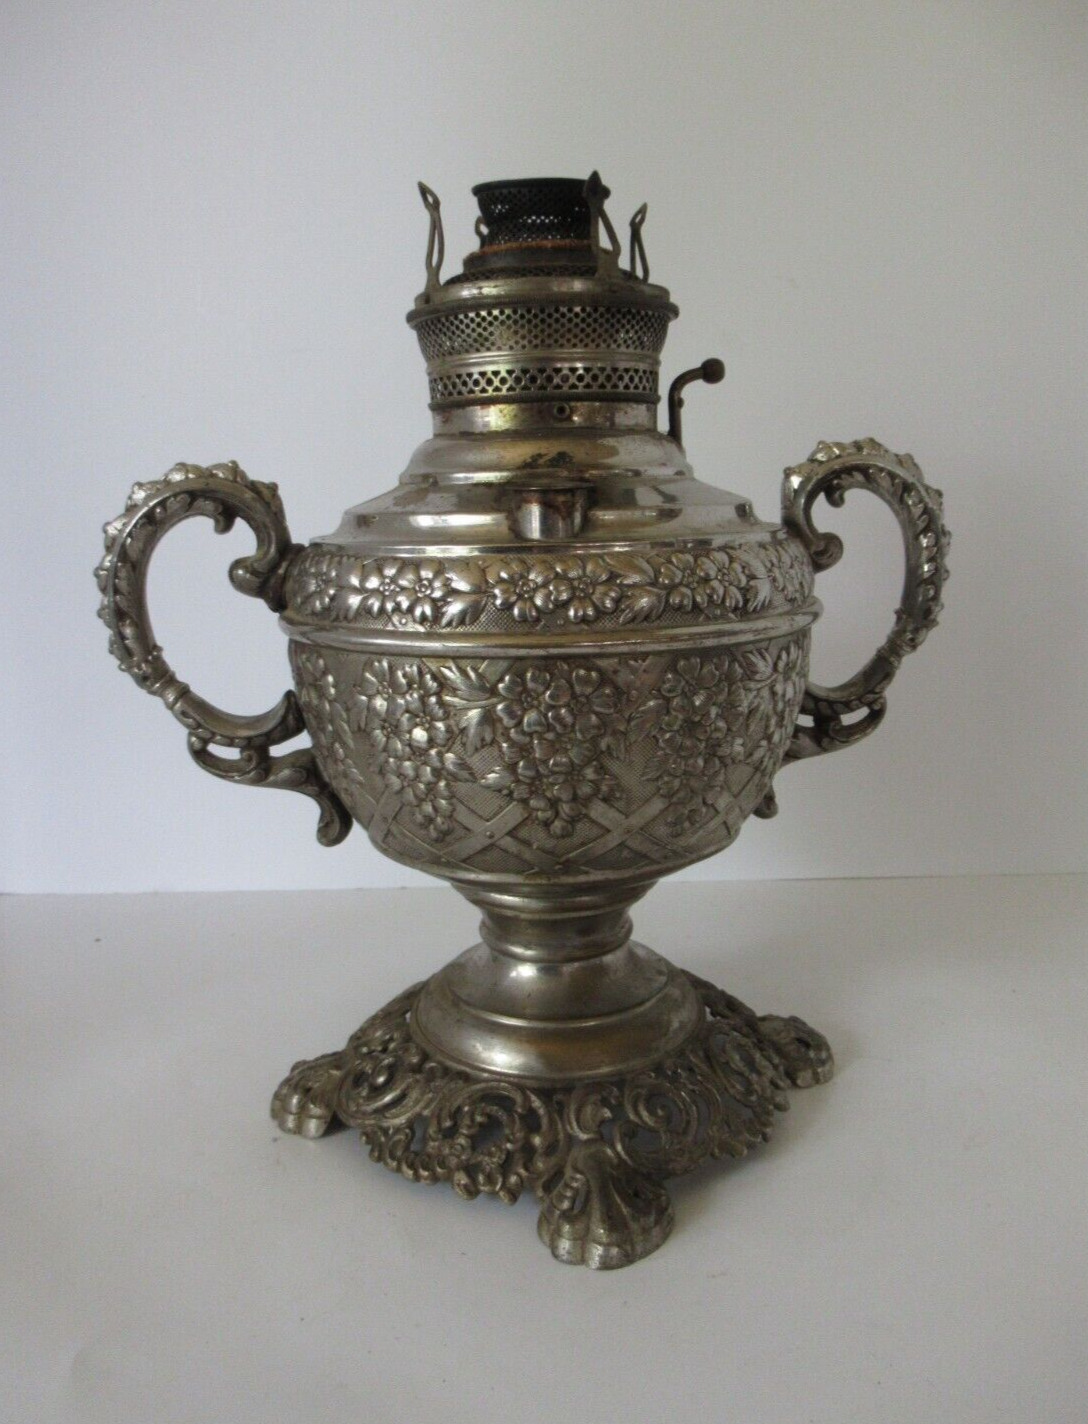 Antique Silver Parlor oil lamp The Juno Lamp urn shape ornate handles repousse